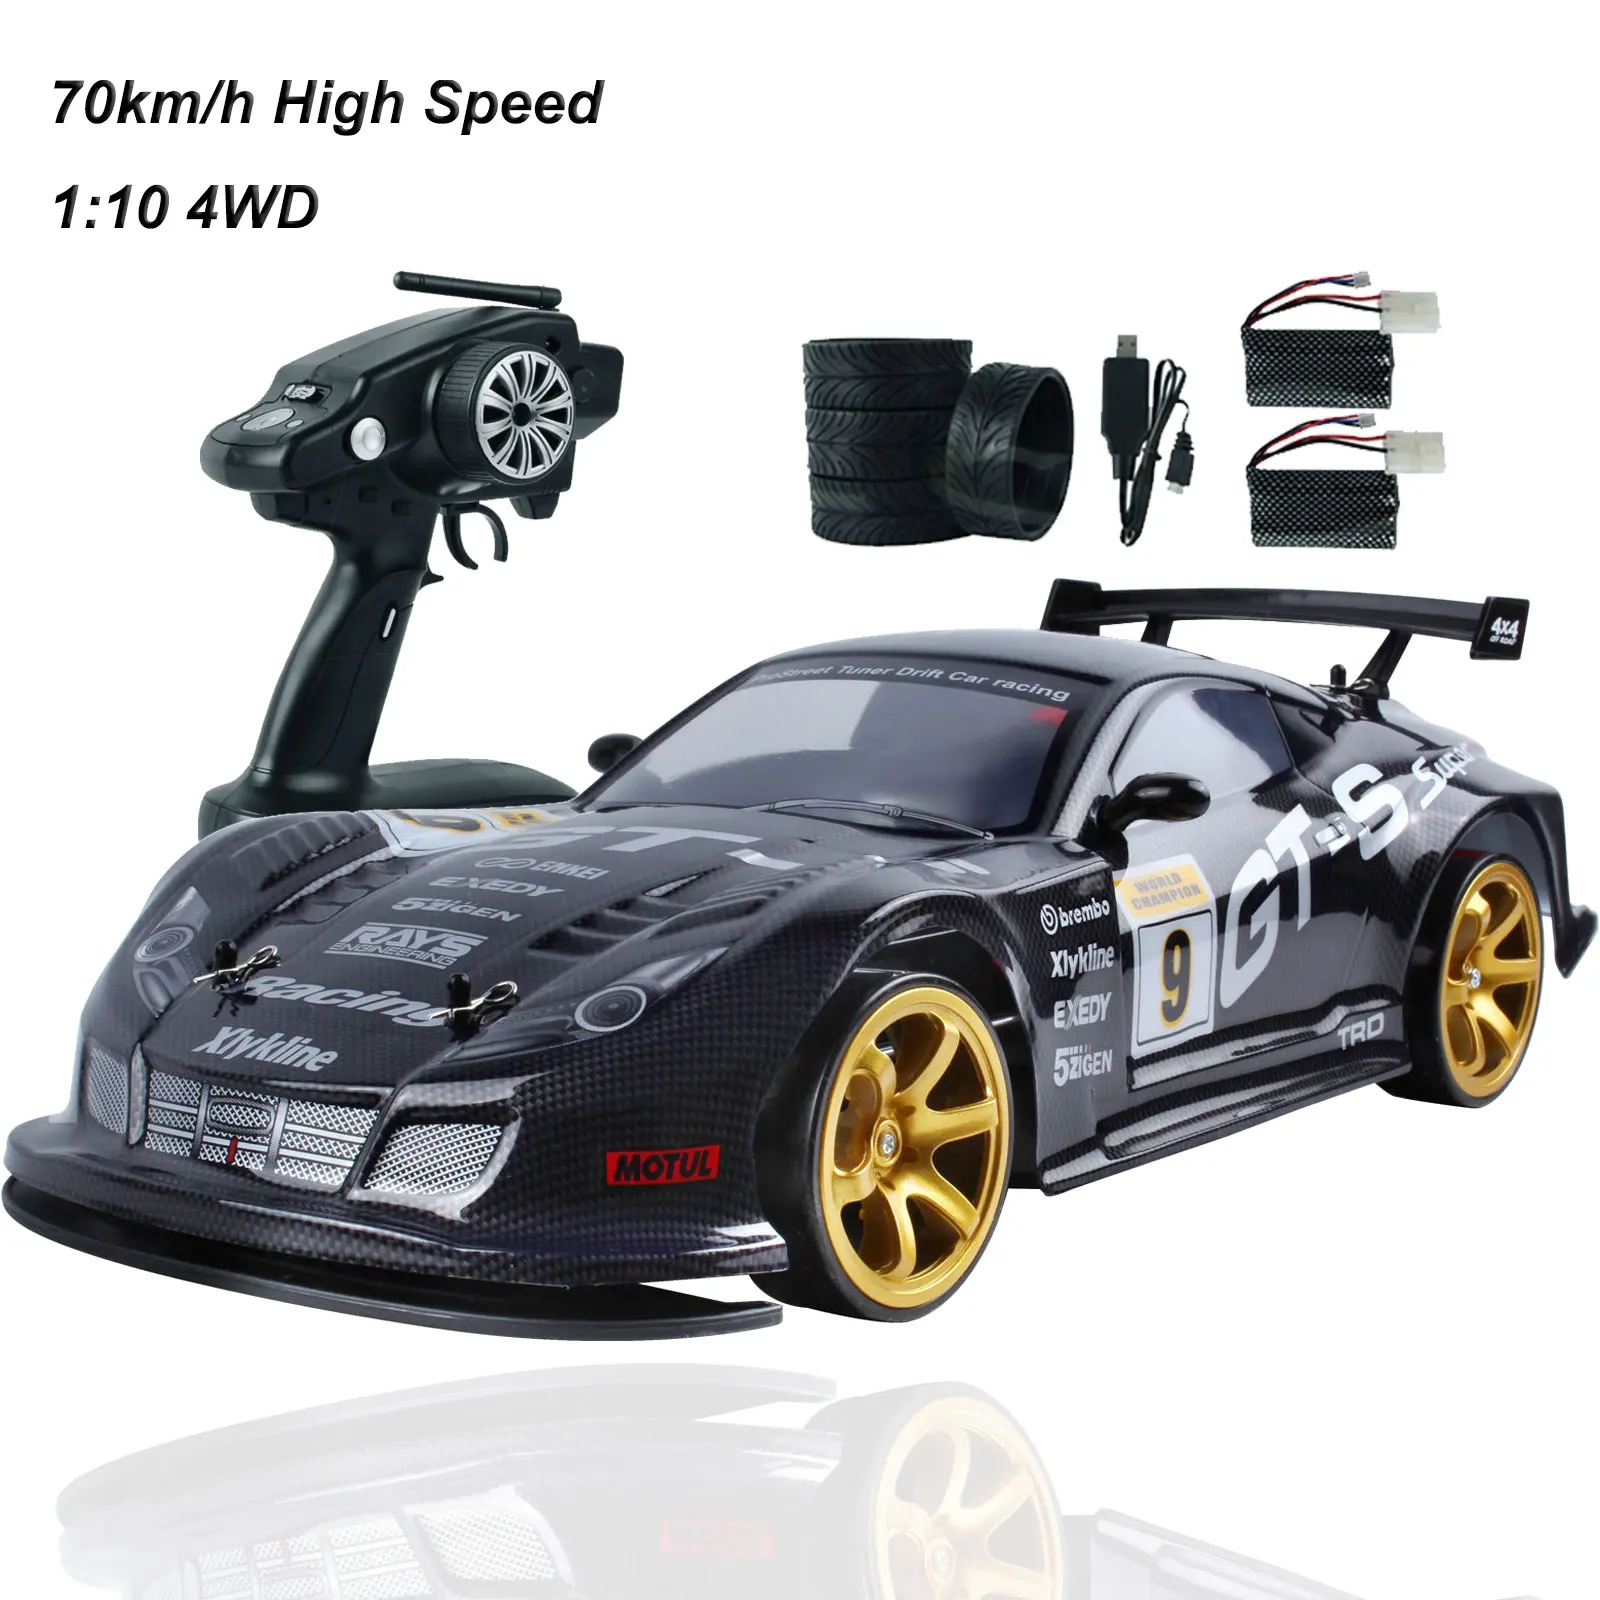 1:10 4WD Remote Control Car 70km/h High Speed Drift Racing Remote Control Car Simulation GTR Car Toy Off-road Rc Car Kids Toys